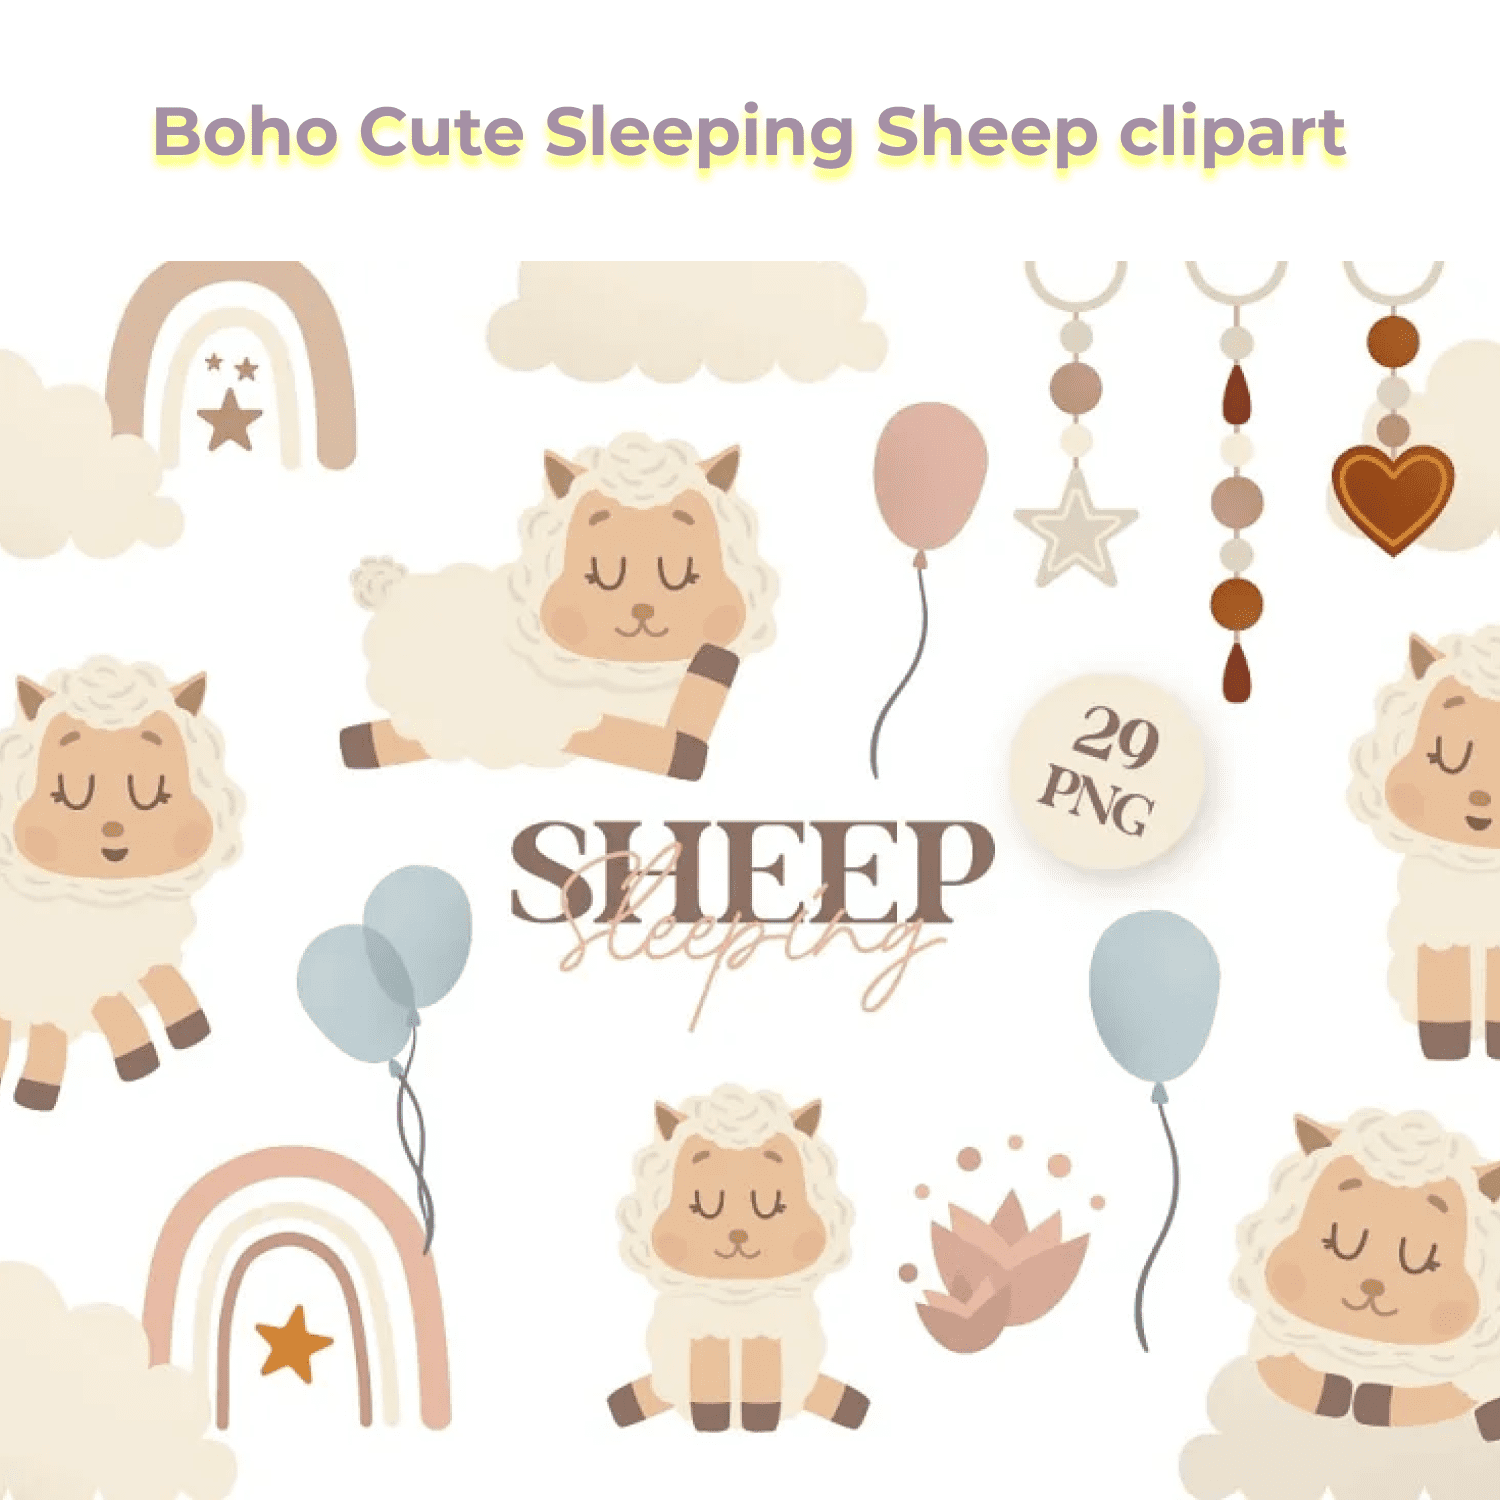 Boho Cute Sleeping Sheep clipart cover.